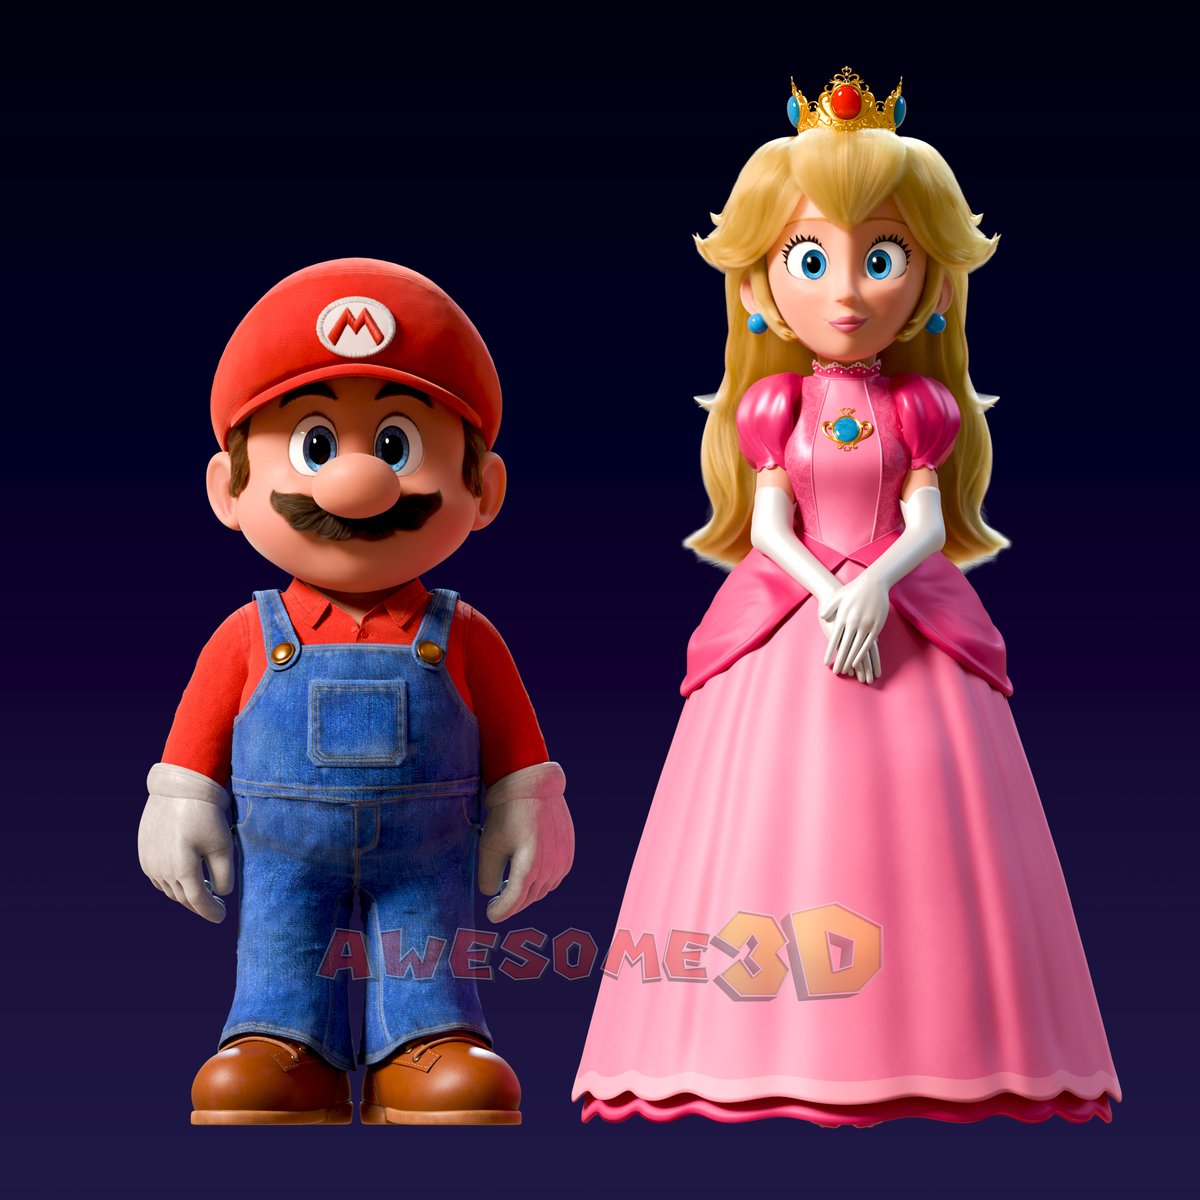 The plumber and the peach! #Mario #PrincessPeach #Supermariomovie